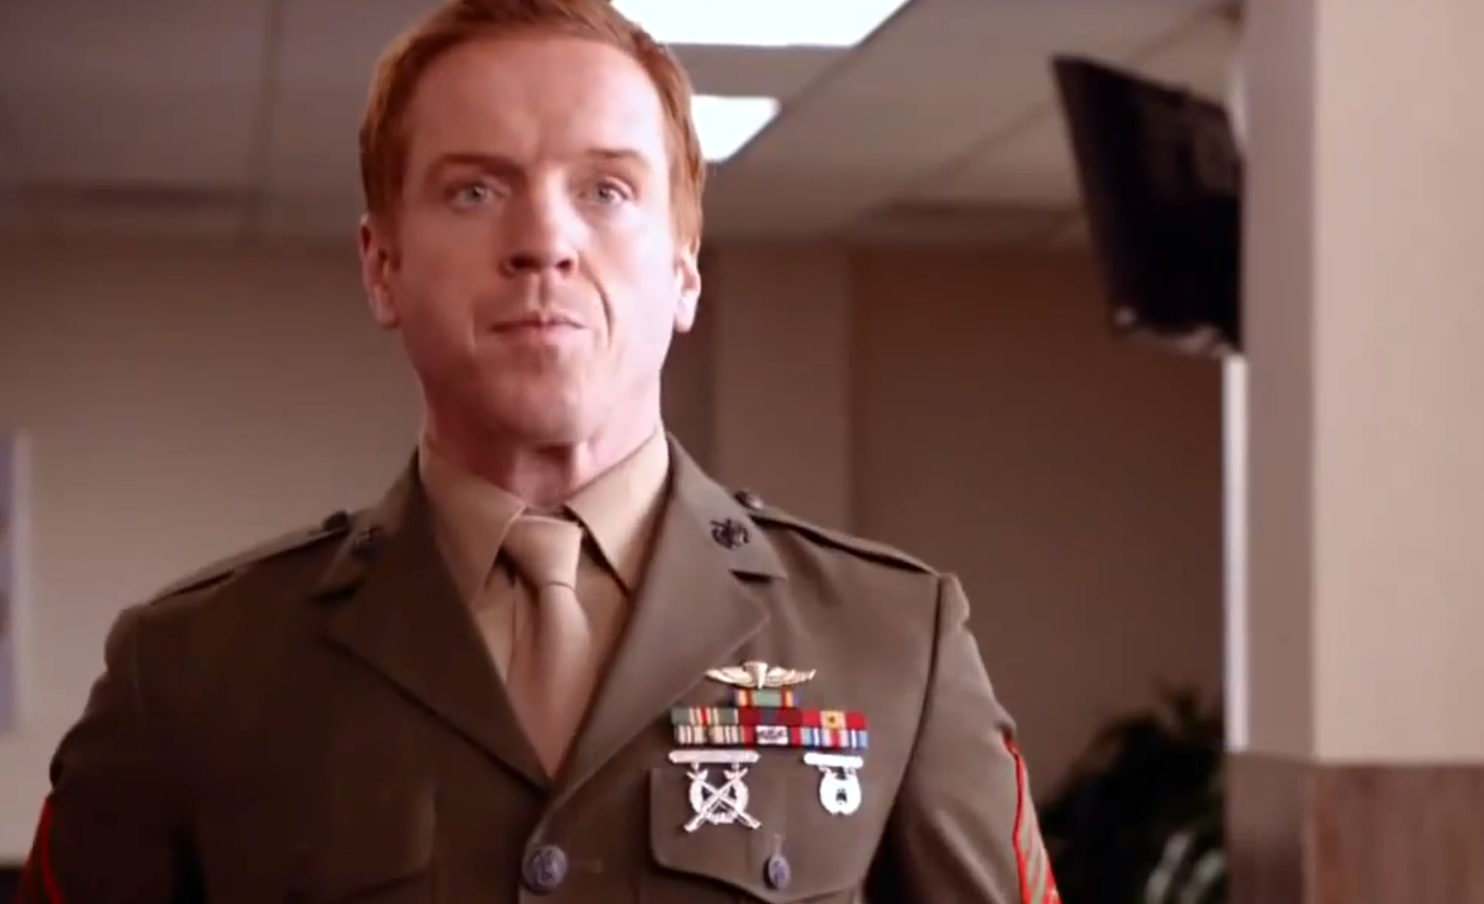 Han spelar marinsoldaten Nicholas Brody.